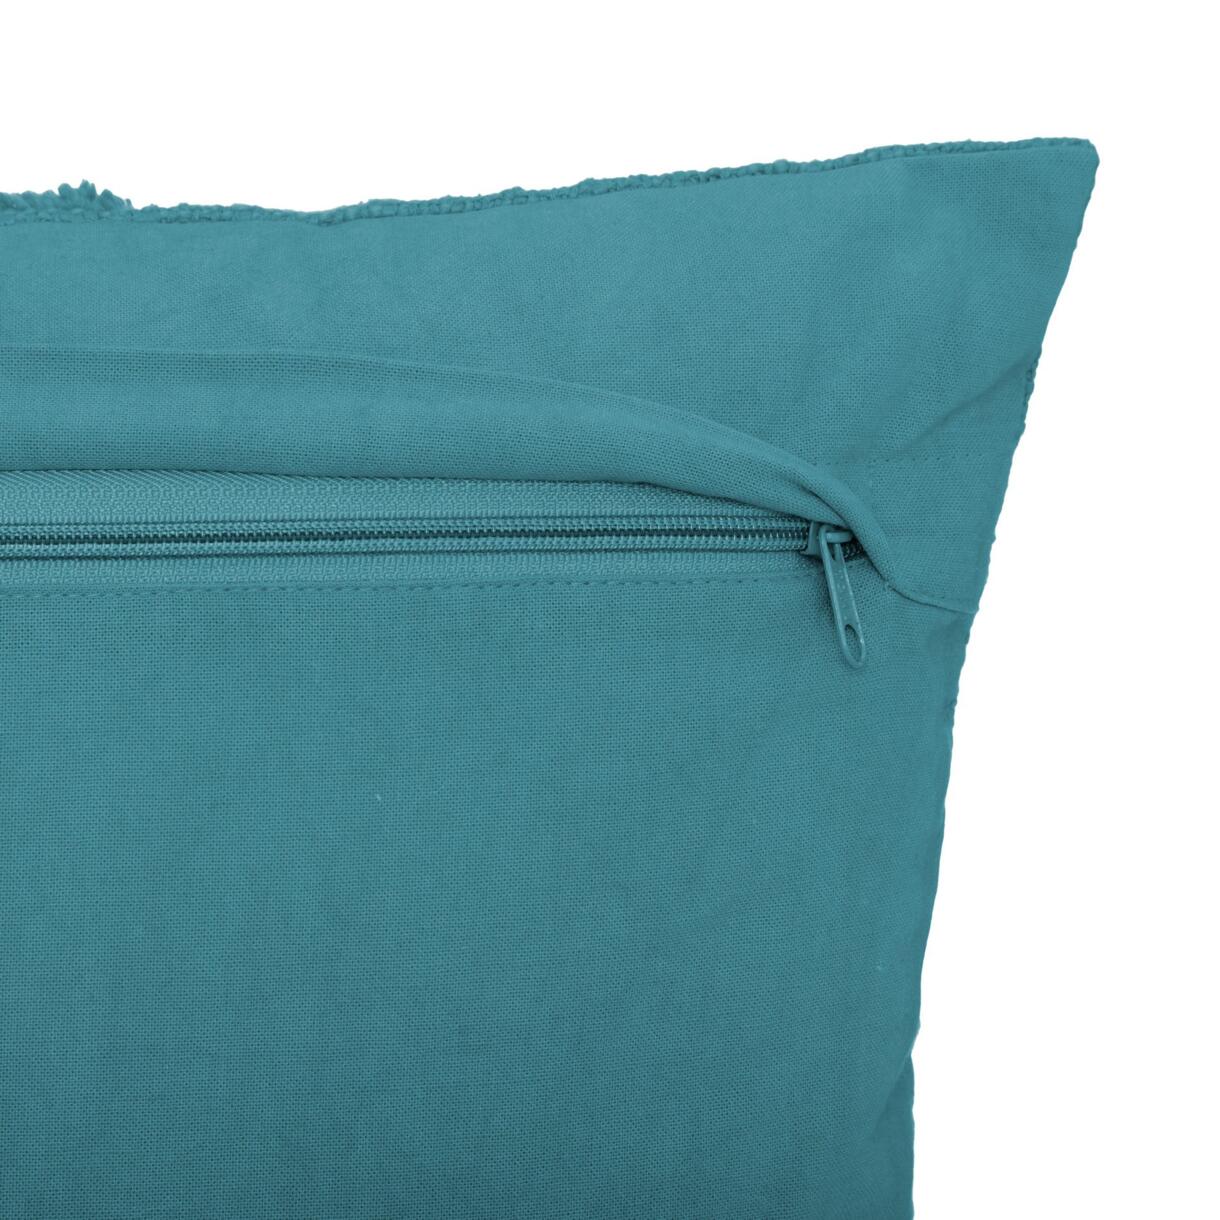 Cuscino quadrato (40 cm) Inca Blu anatra 6